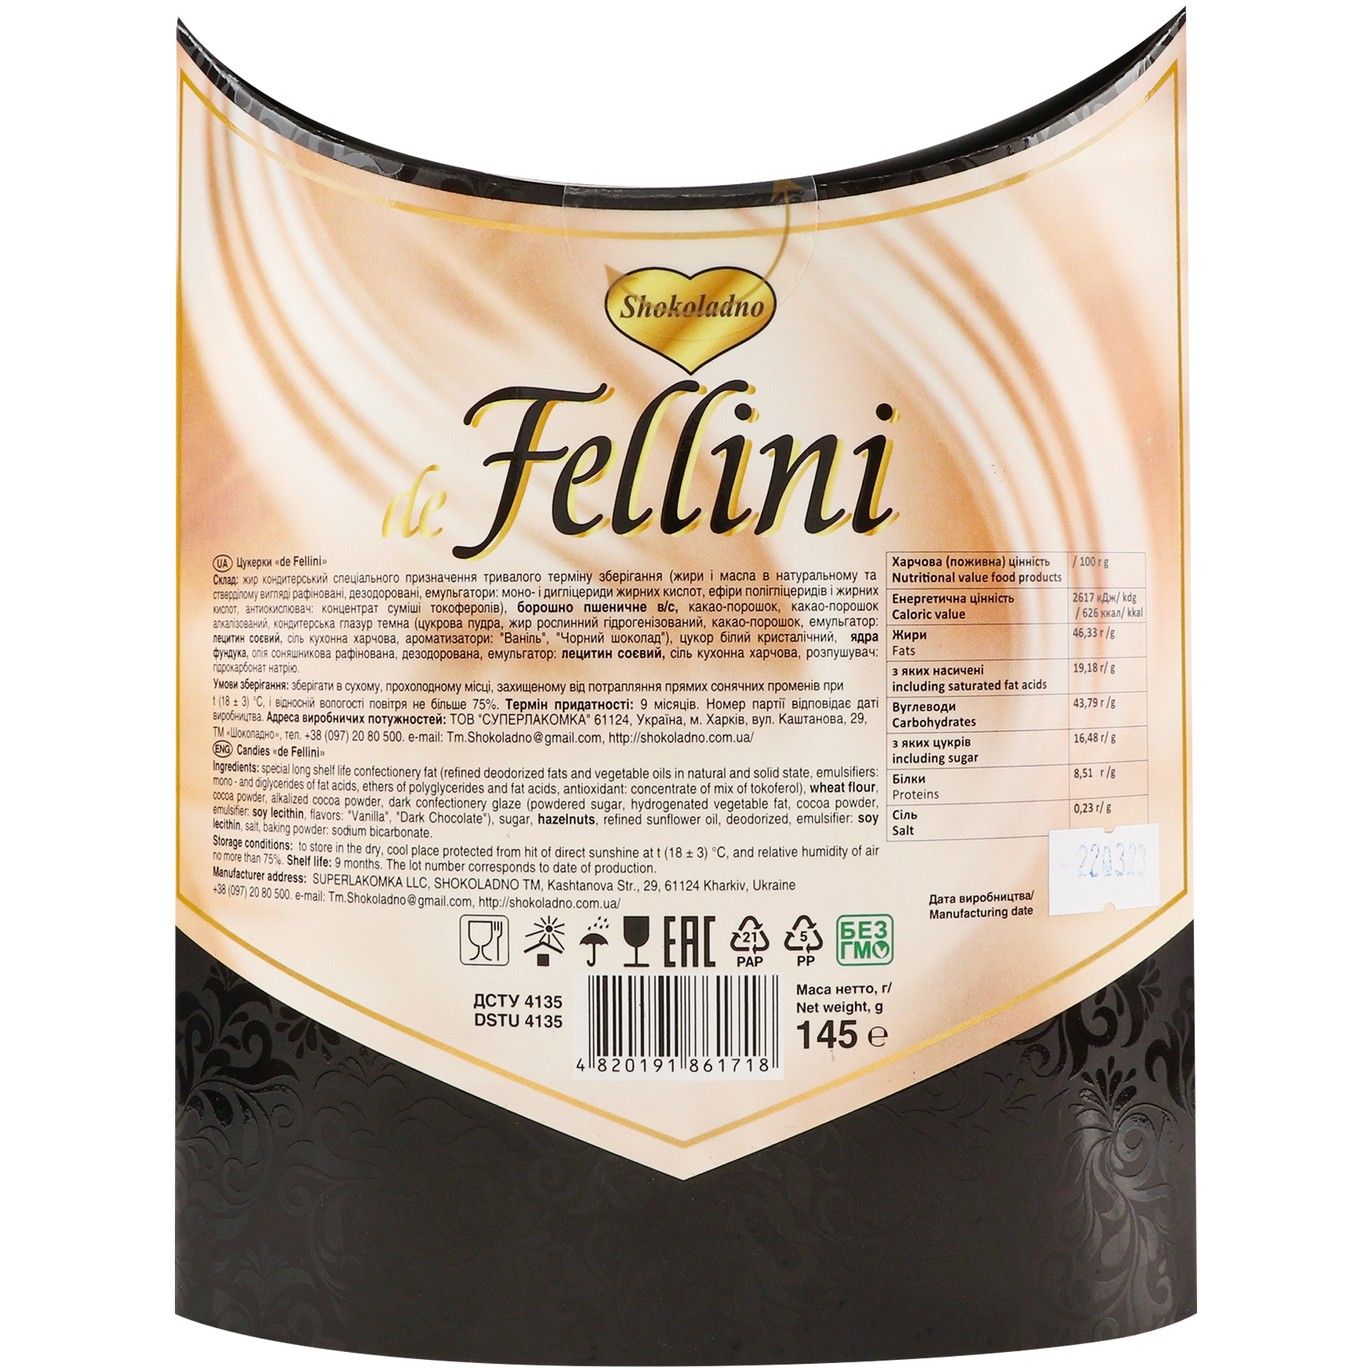 Конфеты Shokoladno de Fellini, 145 г (927580) - фото 2